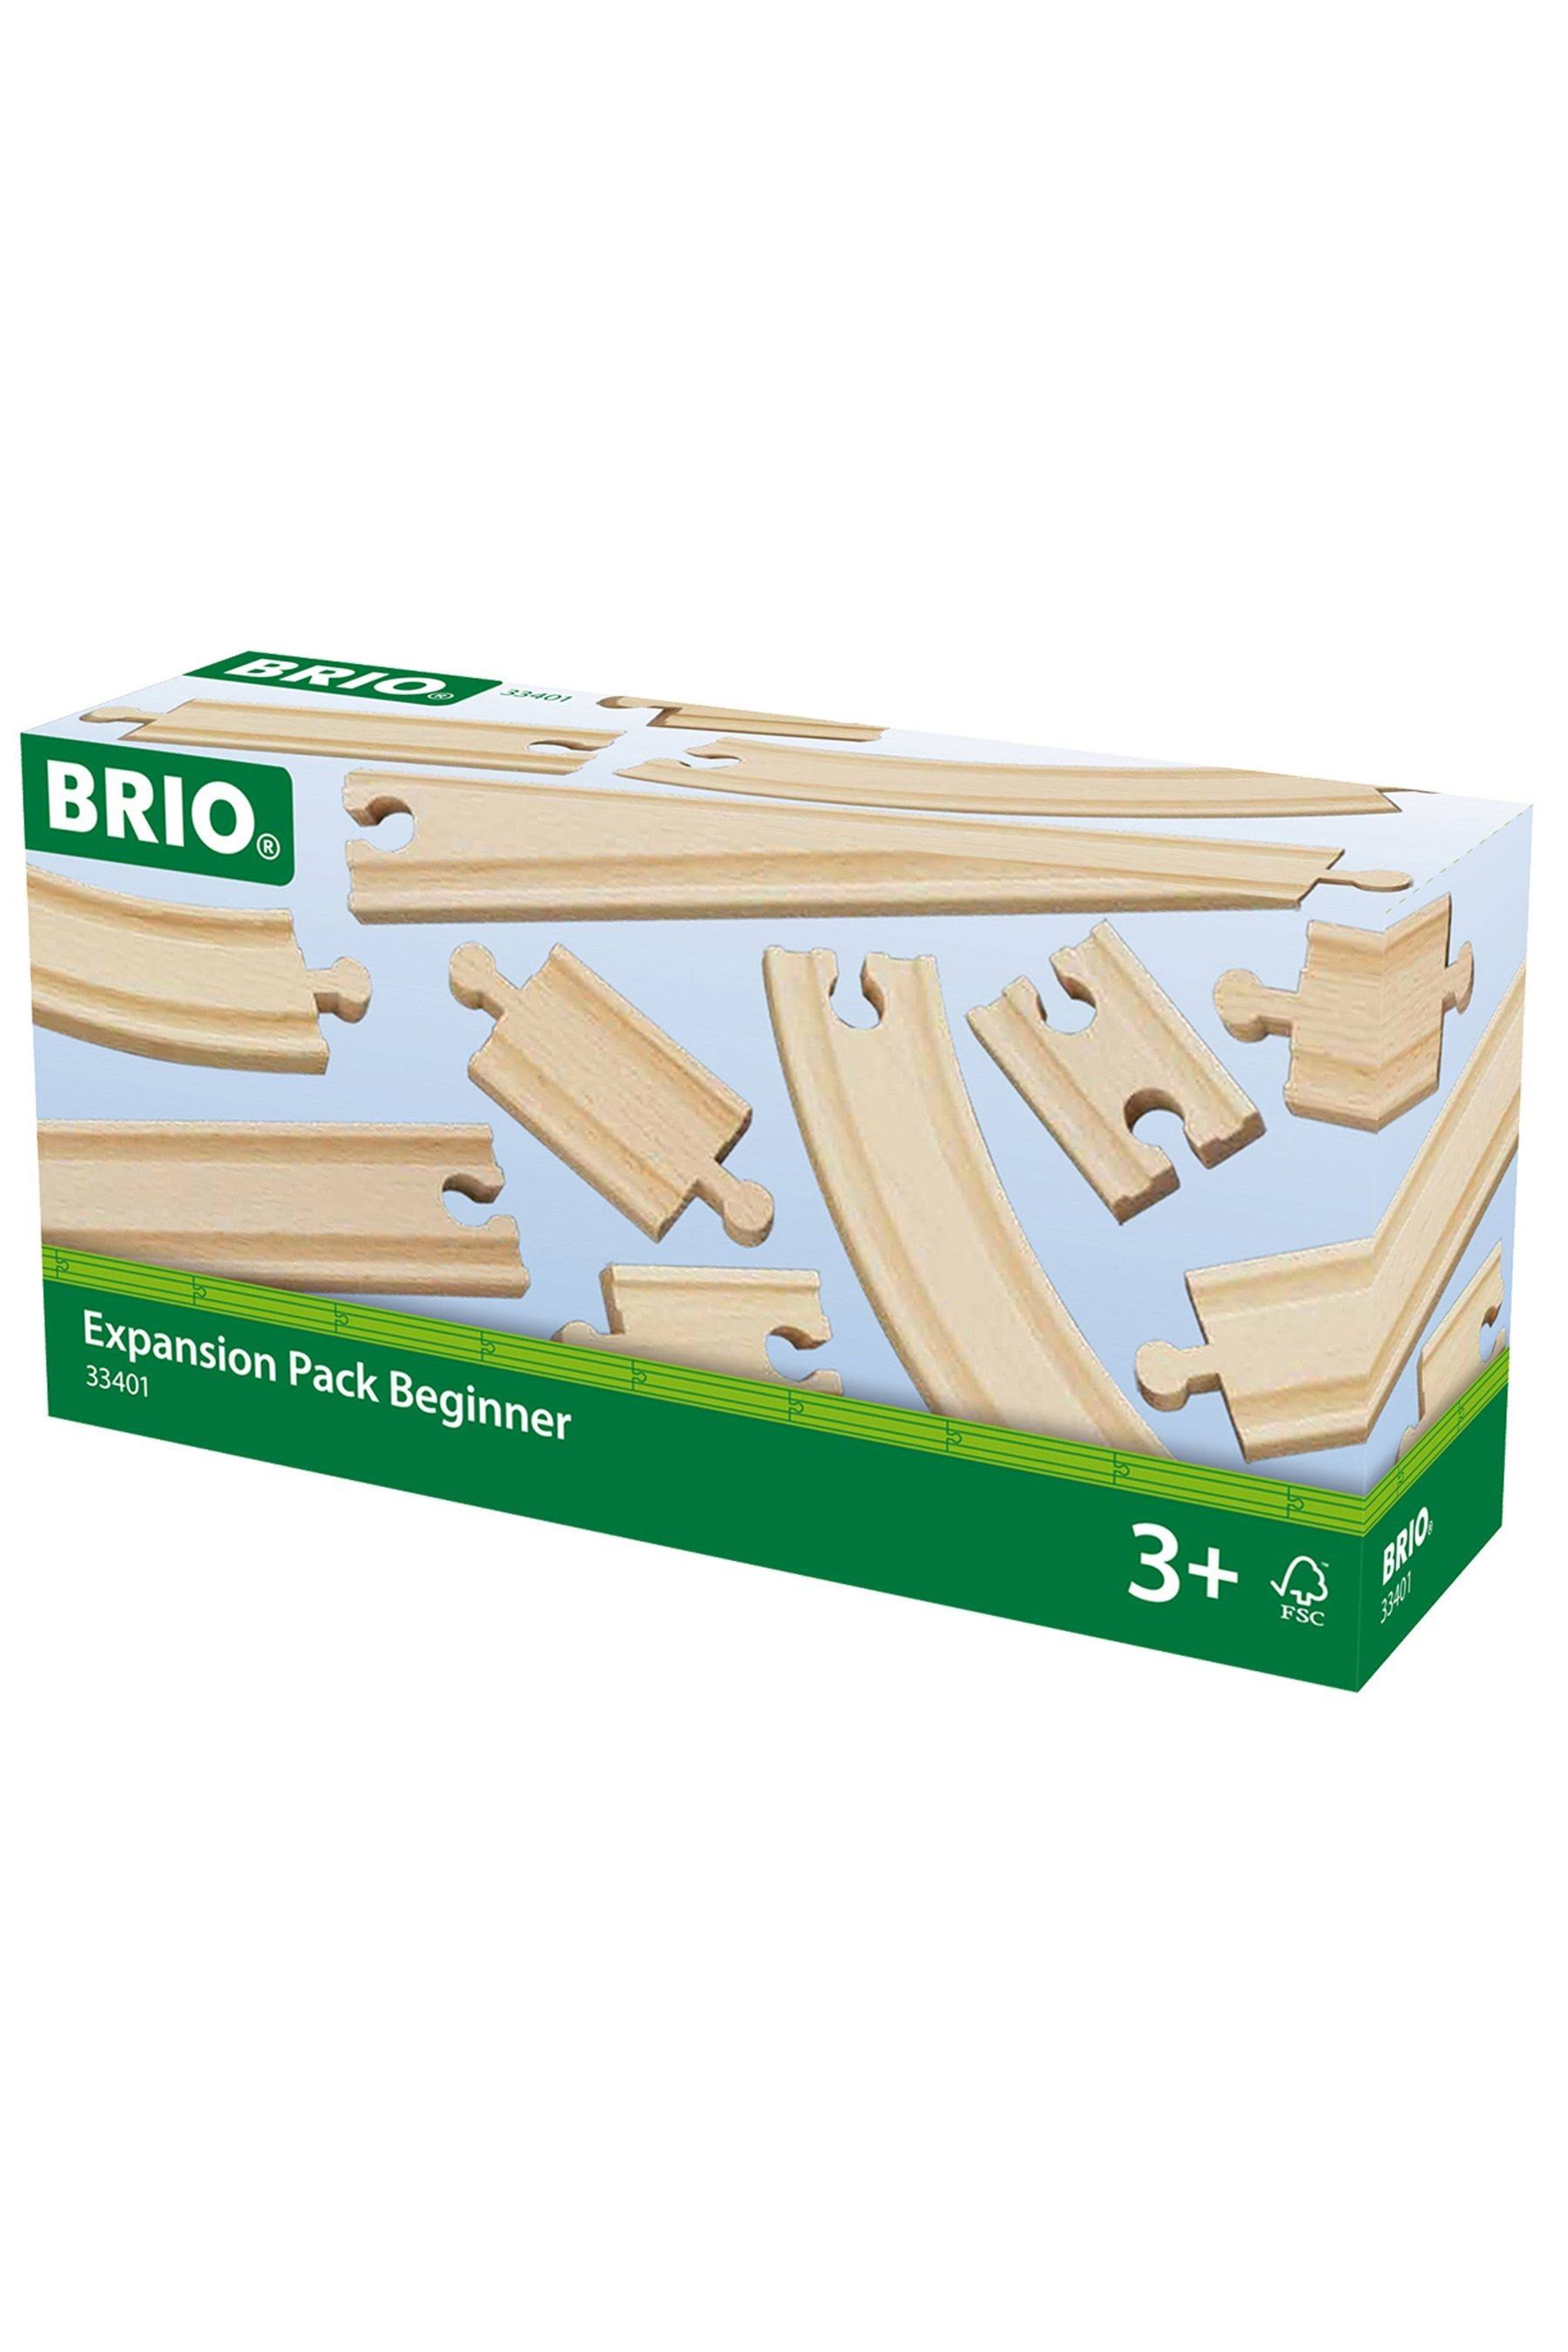 Brio 33401 Expansion Pack Beginner